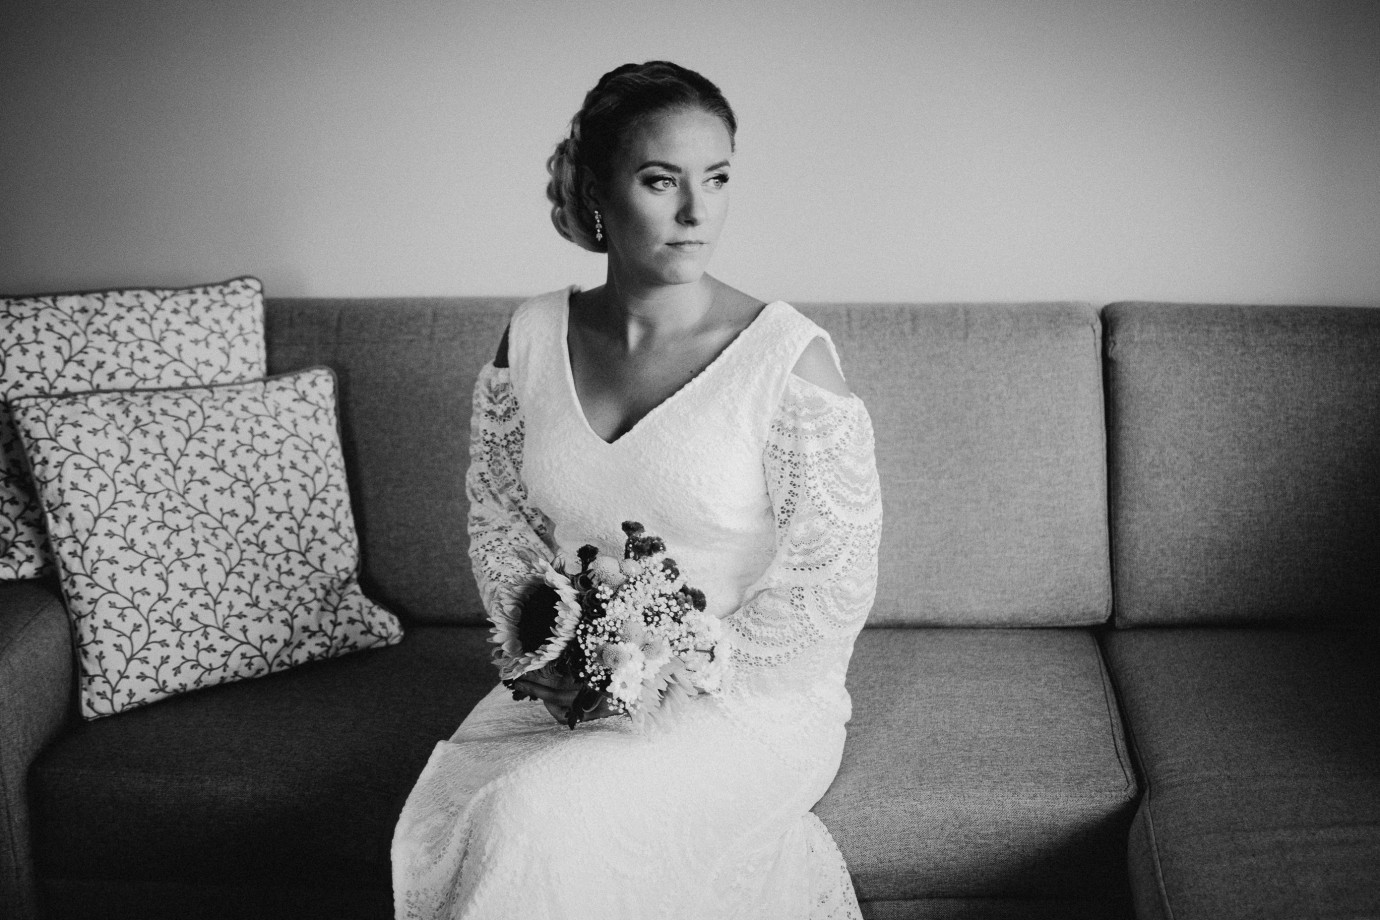 fotograf gdansk hanna-magiera-fotografia portfolio zdjecia slubne inspiracje wesele plener slubny sesja slubna